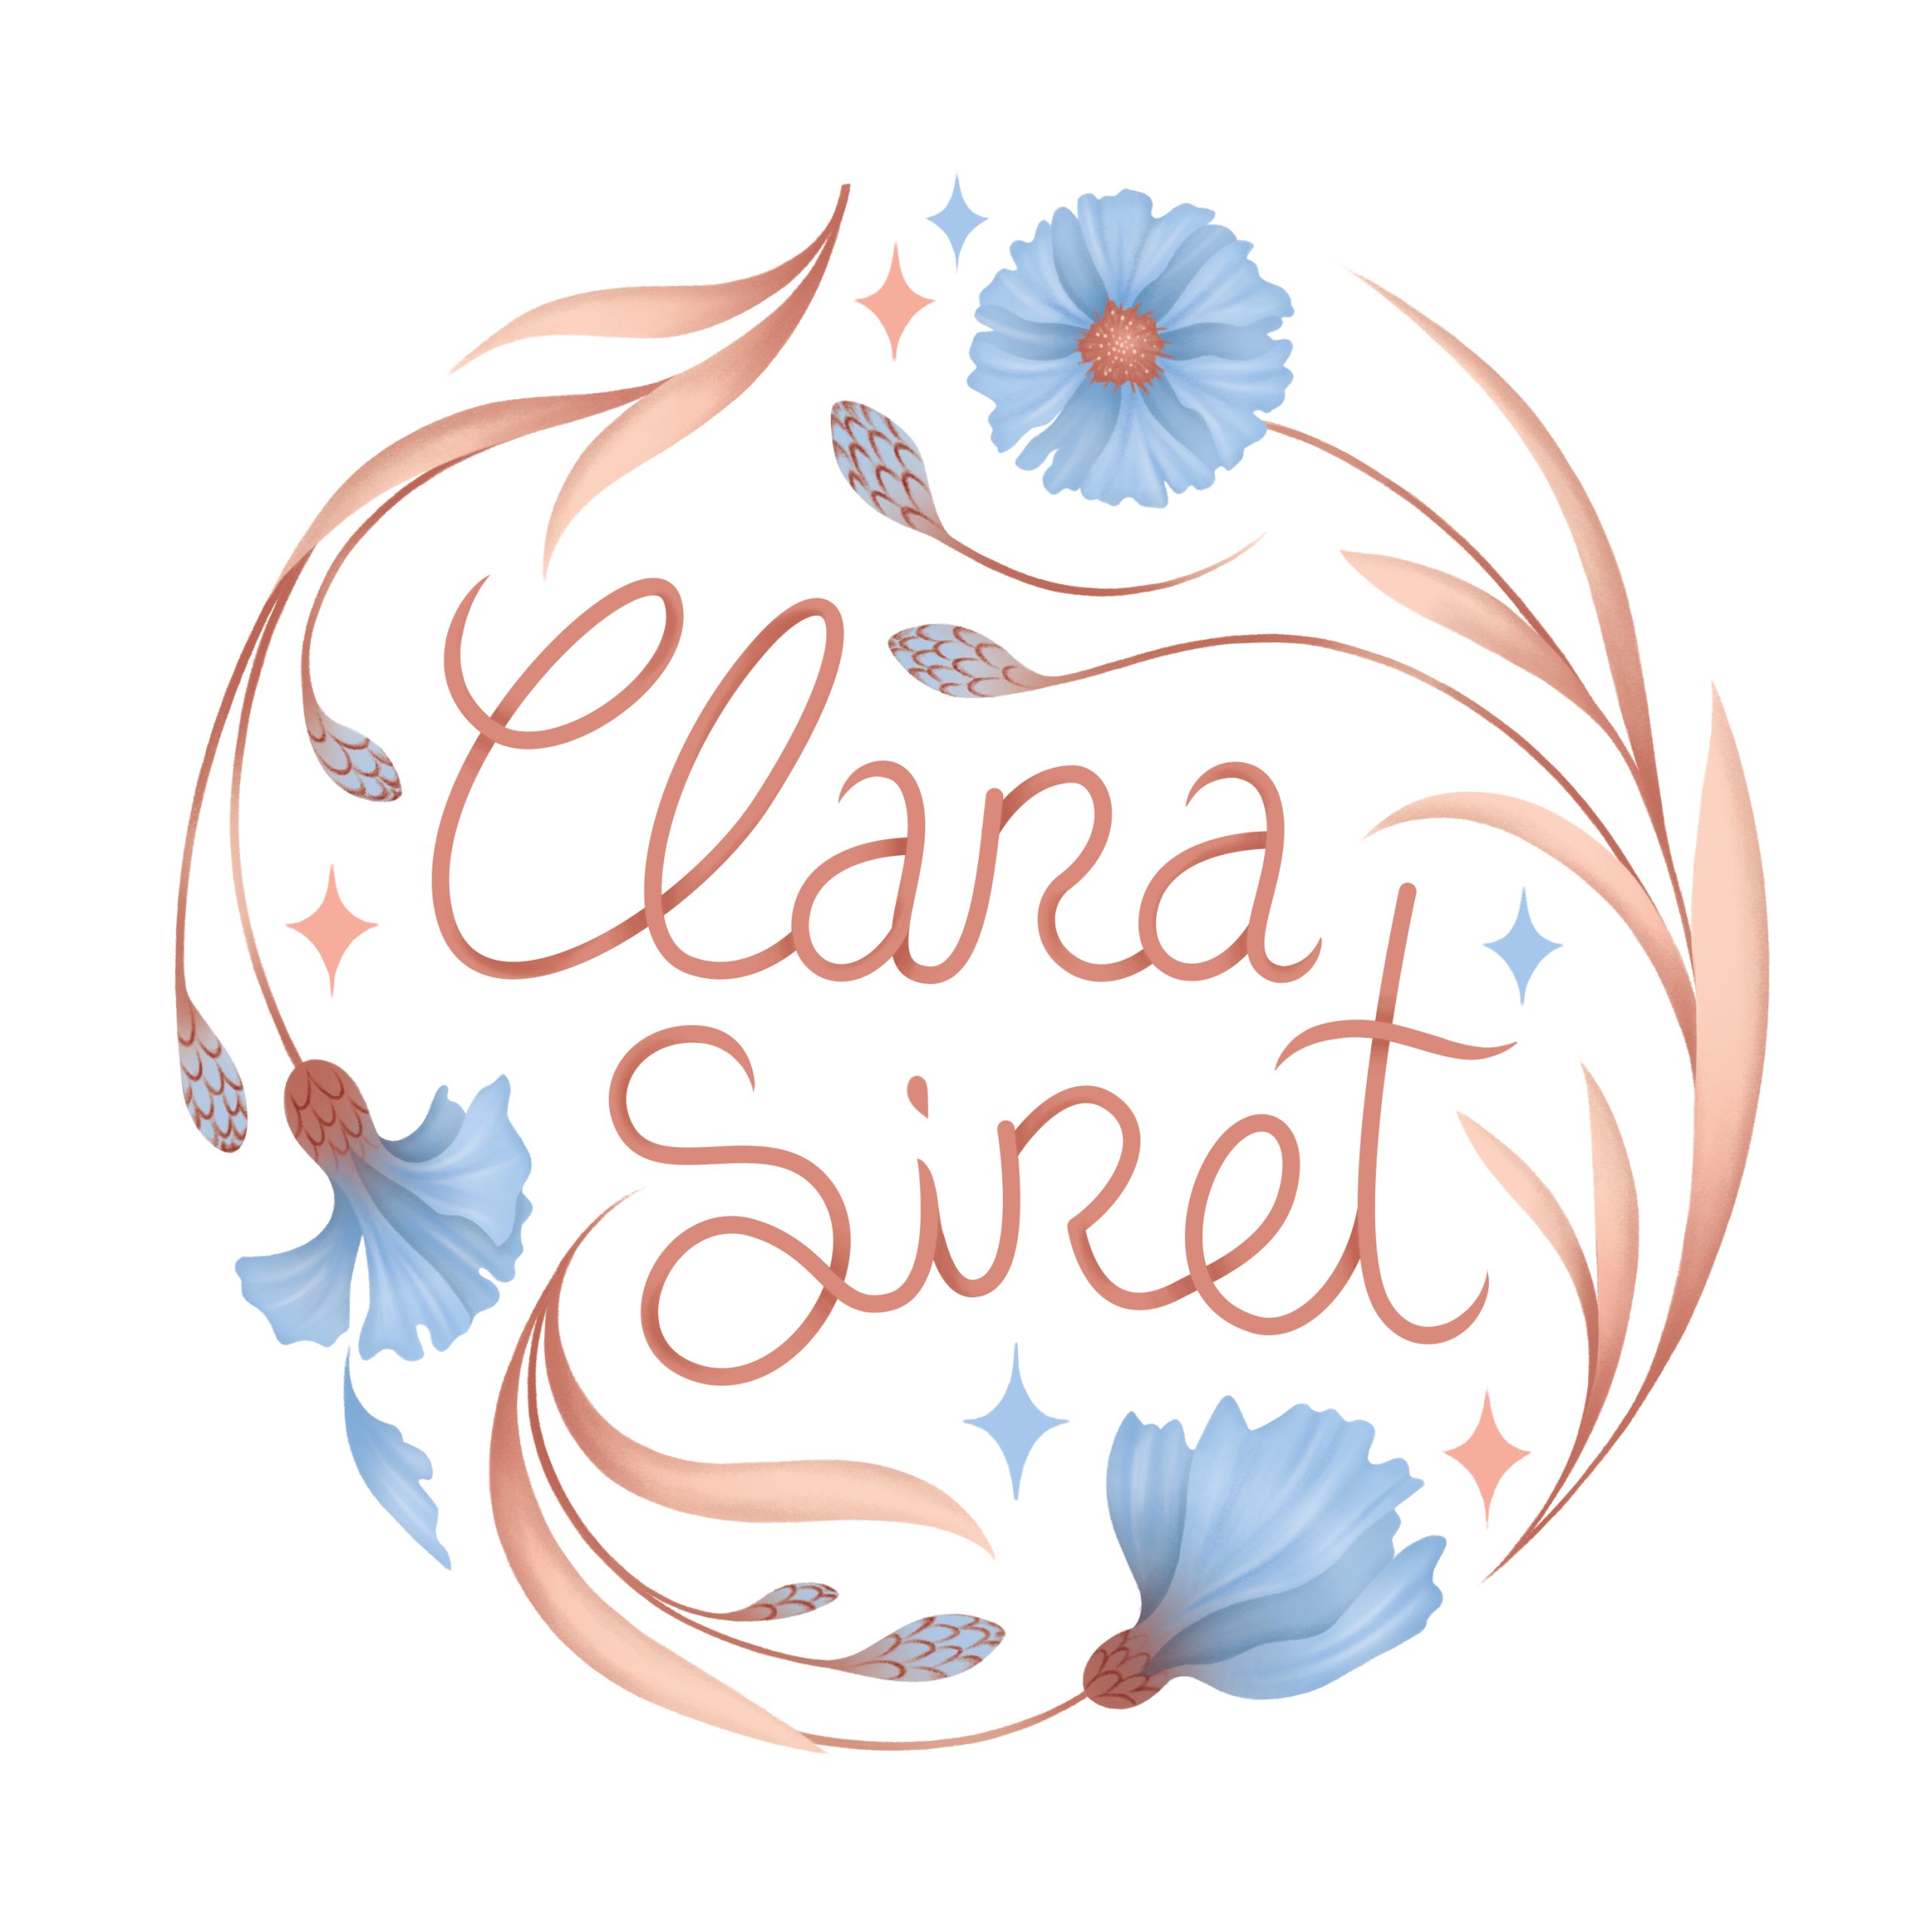 Clara Siret